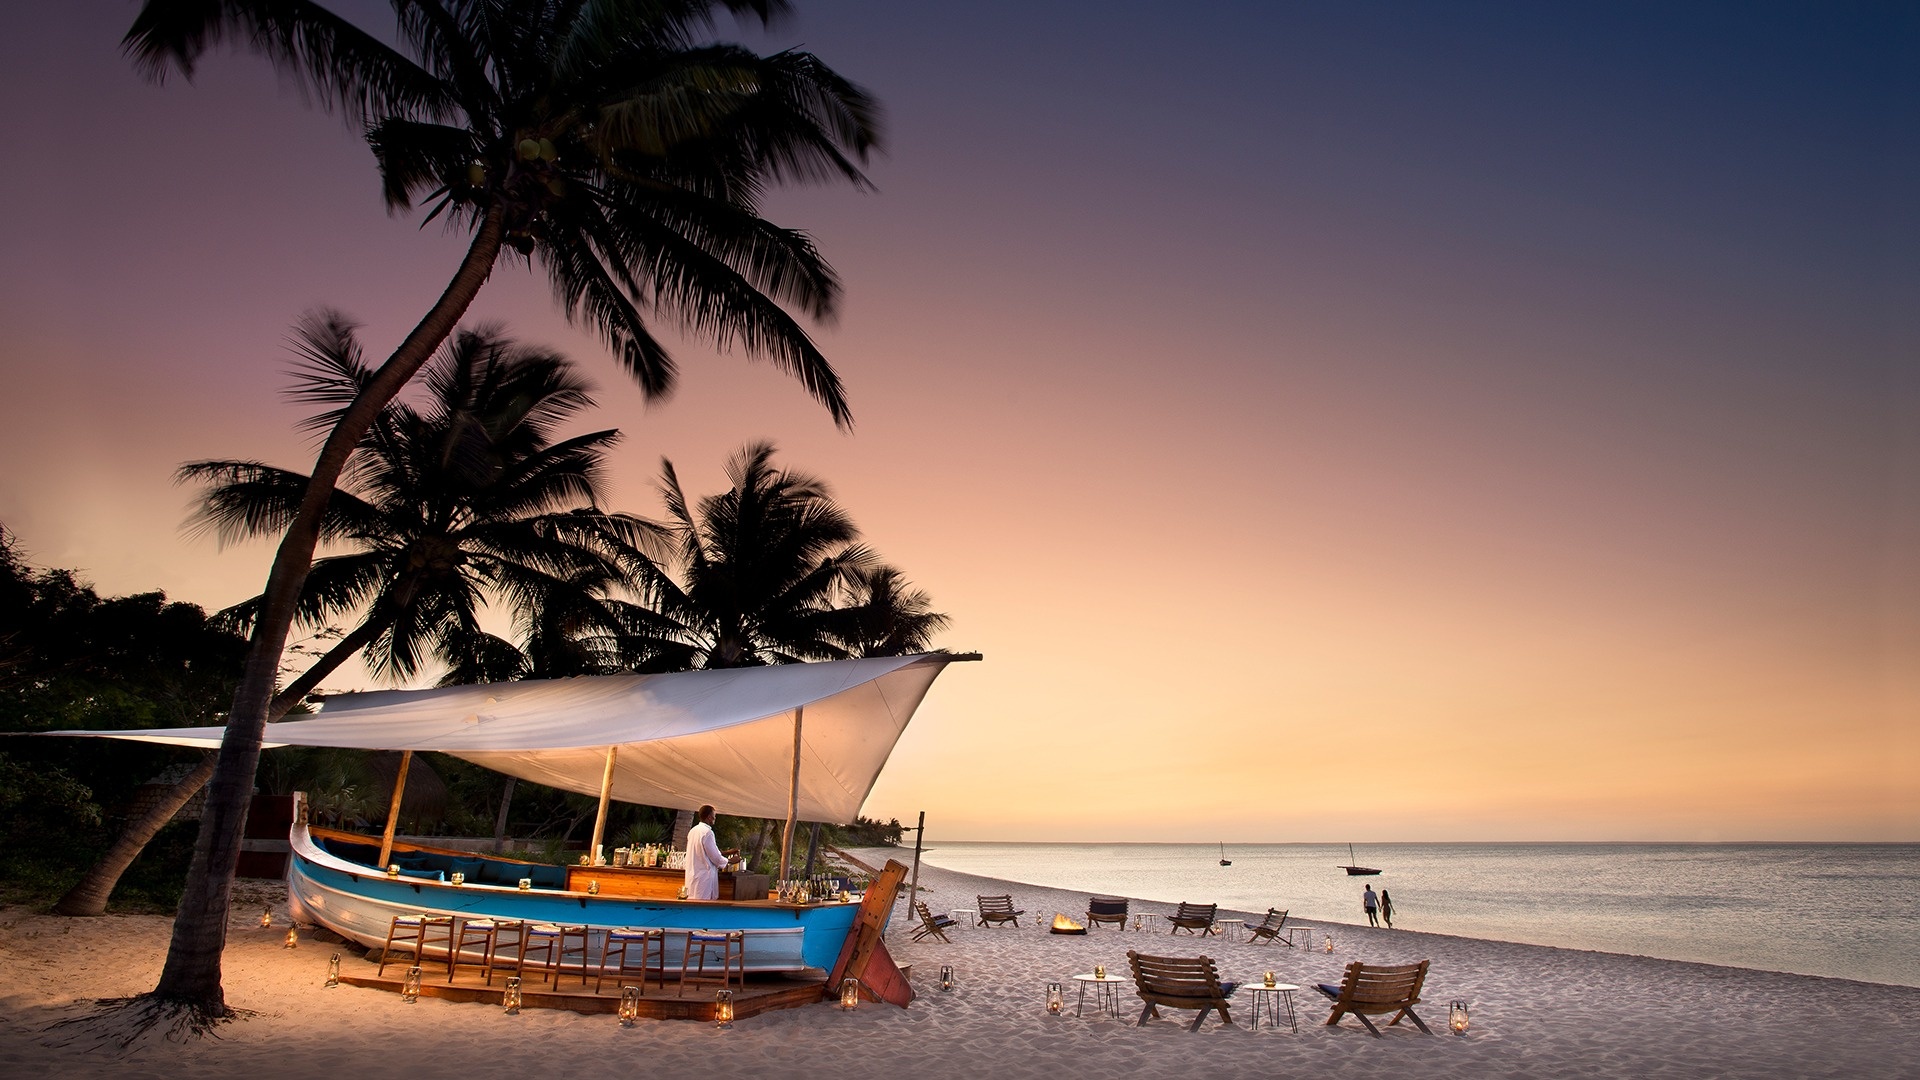 Indian Ocean, Island paradise, Tropical travel destination, Palm trees, 1920x1080 Full HD Desktop